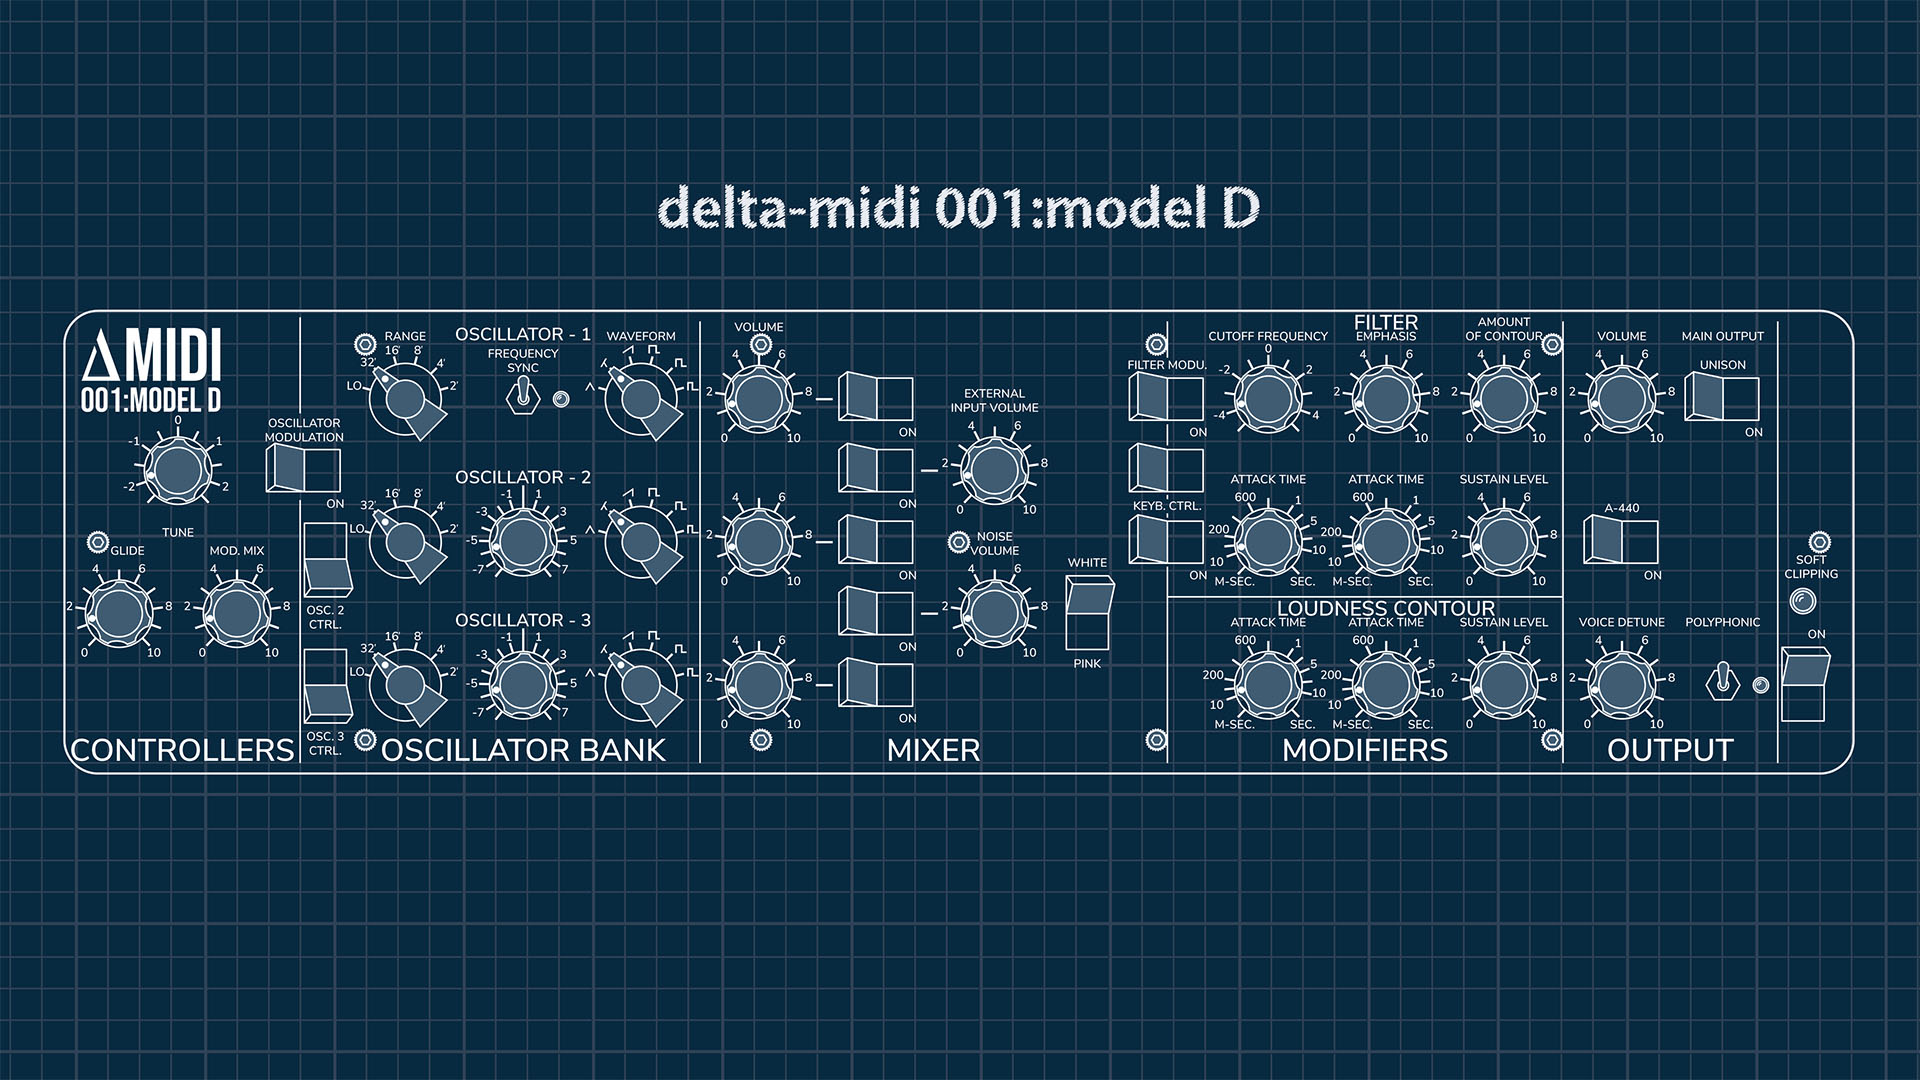 001:model D - MIDI CC control surface